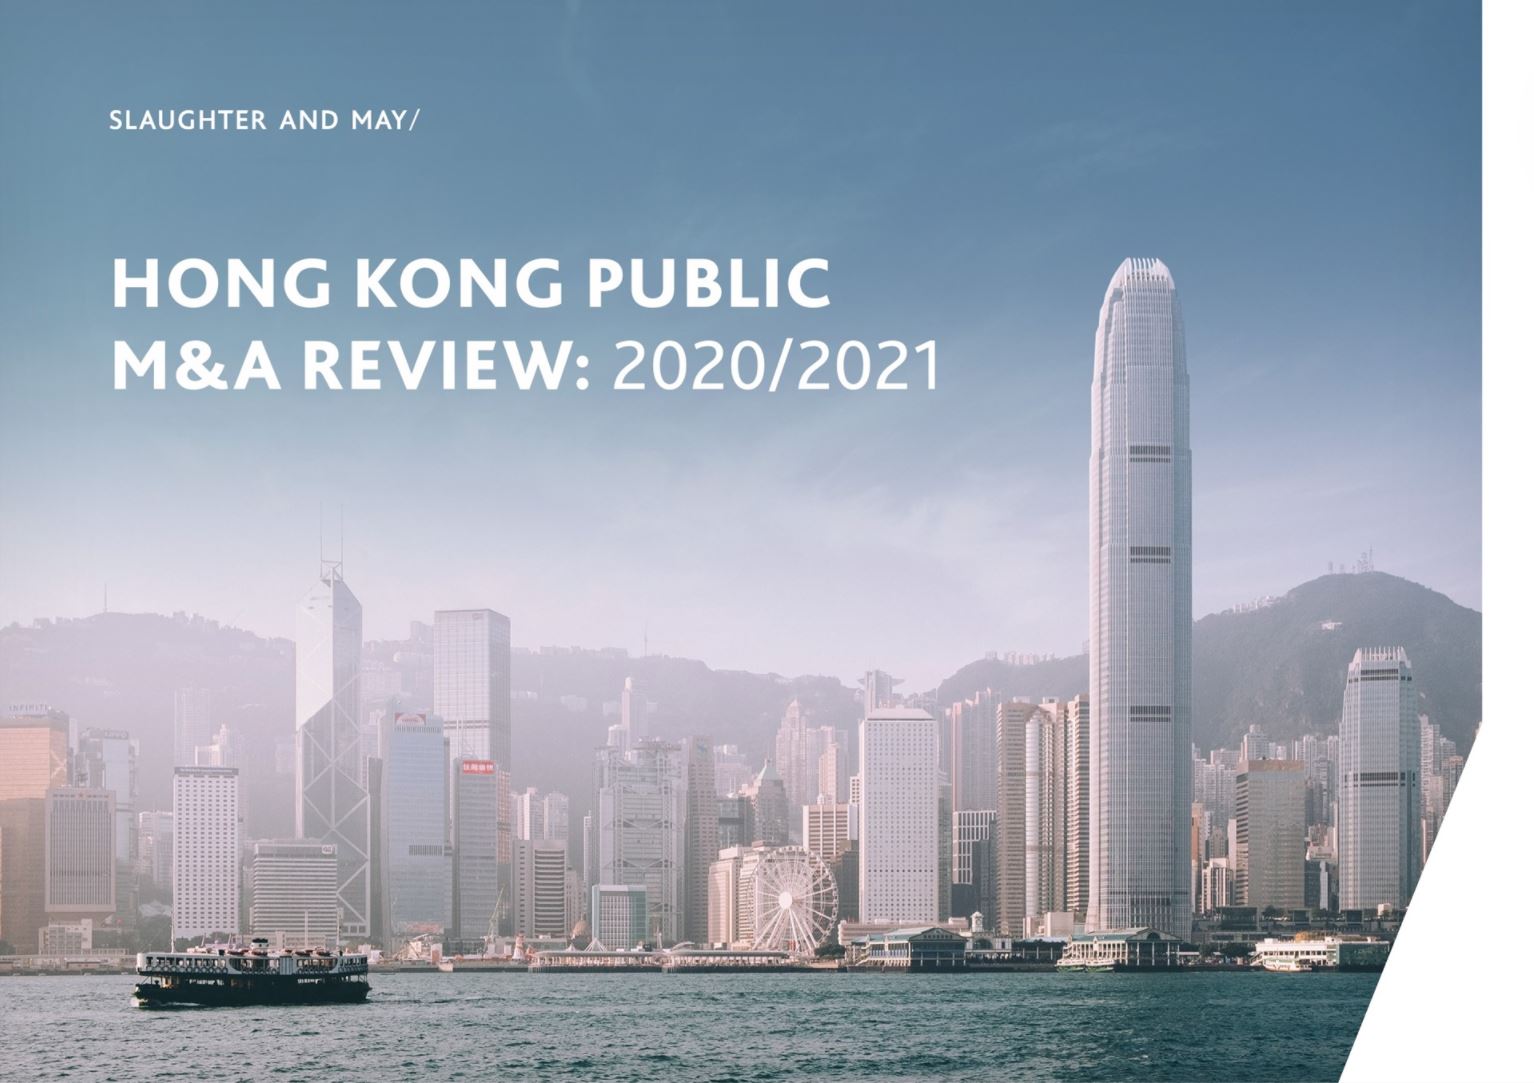 Hong Kong Public M&A Review: 2020/2021